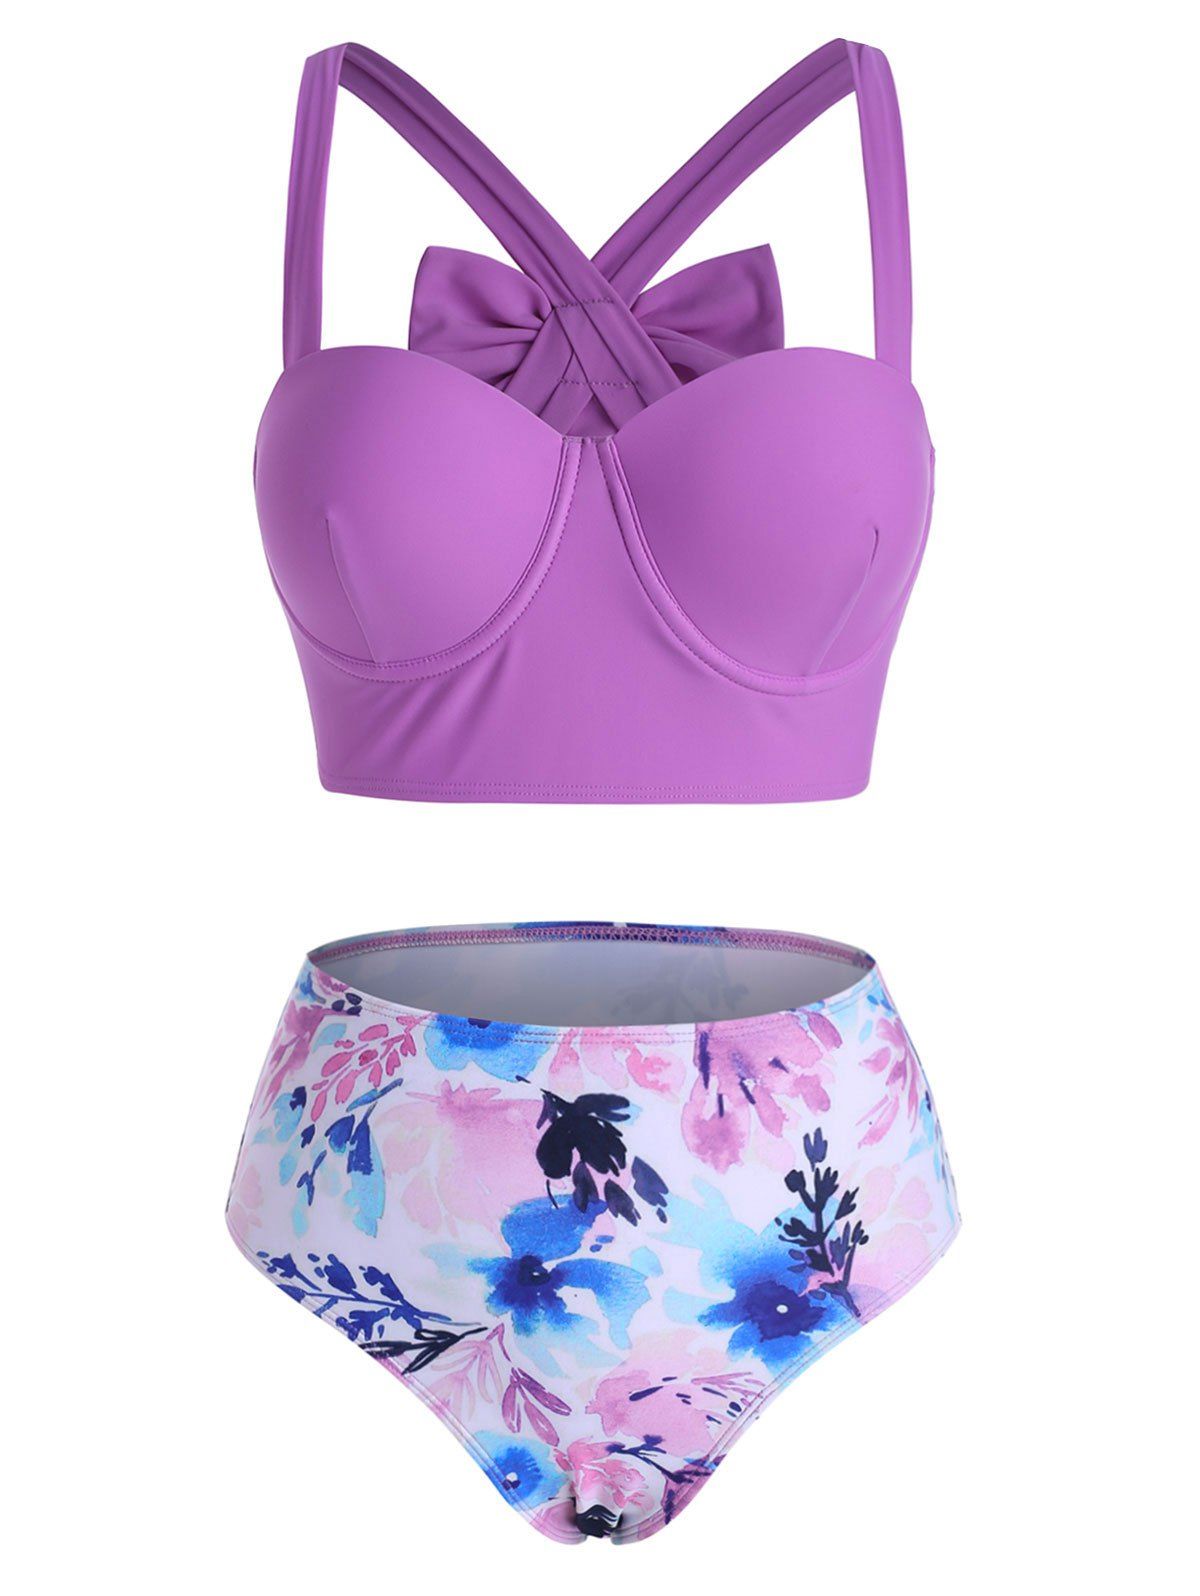 Bowknot Back Push Up Floral Bikini Swimwear - LIGHT PURPLE S